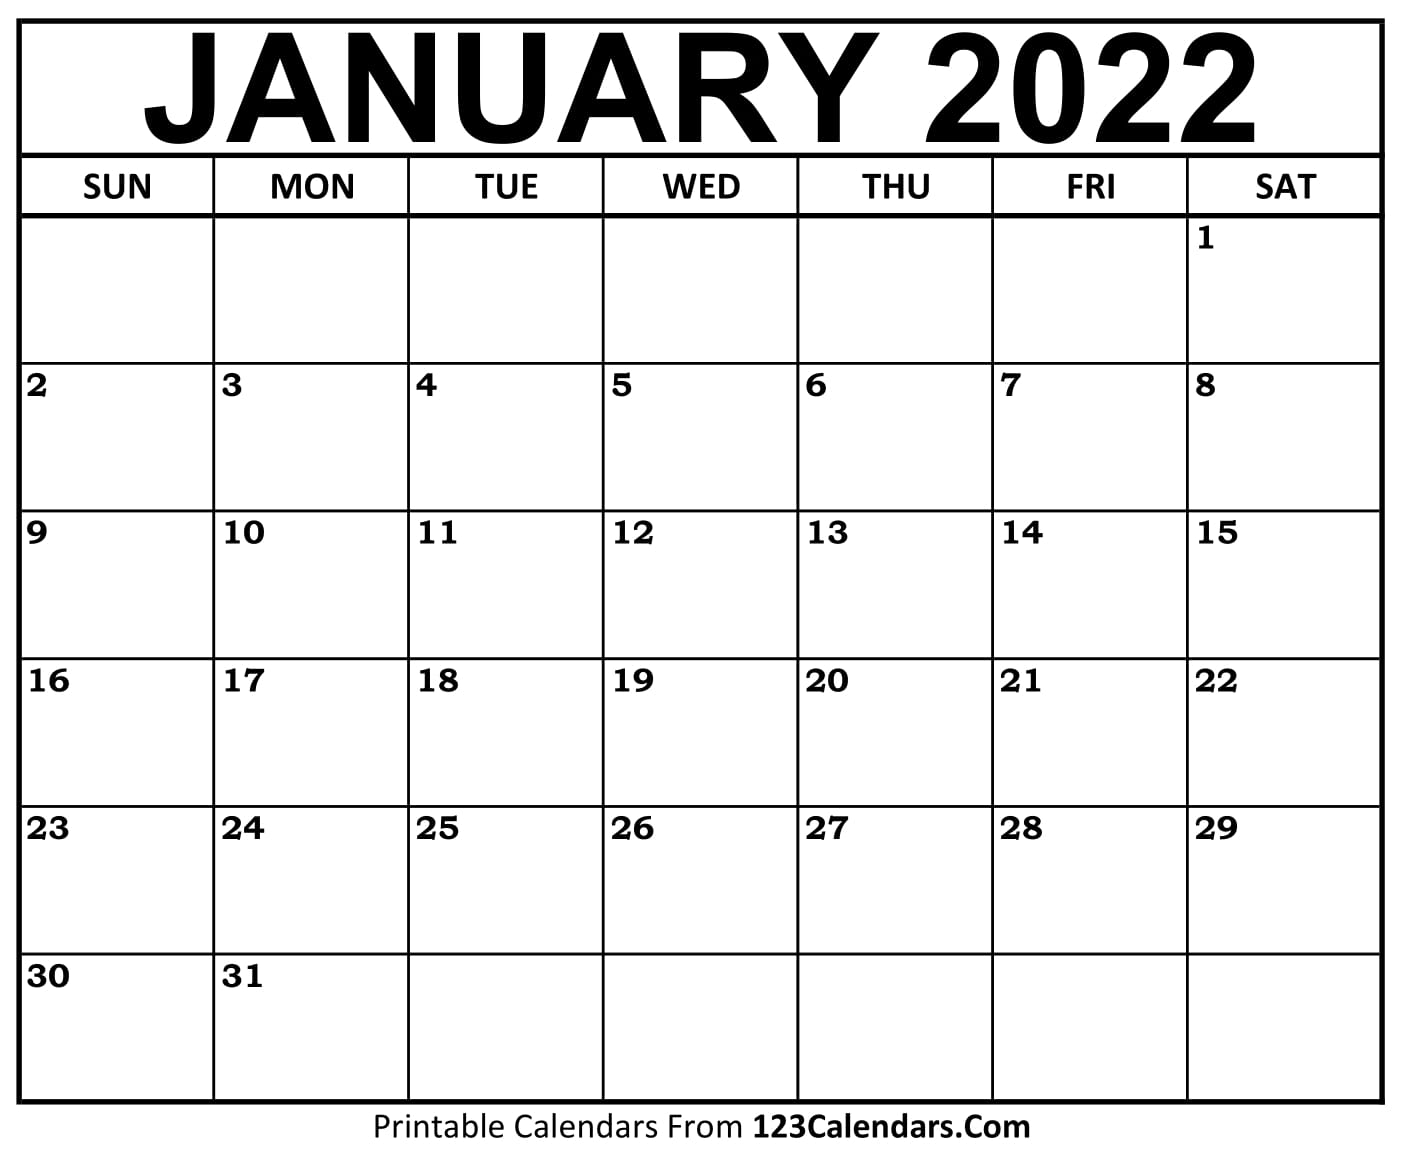 January 2022 Schedule Printable January 2022 Calendar Templates - 123Calendars.com